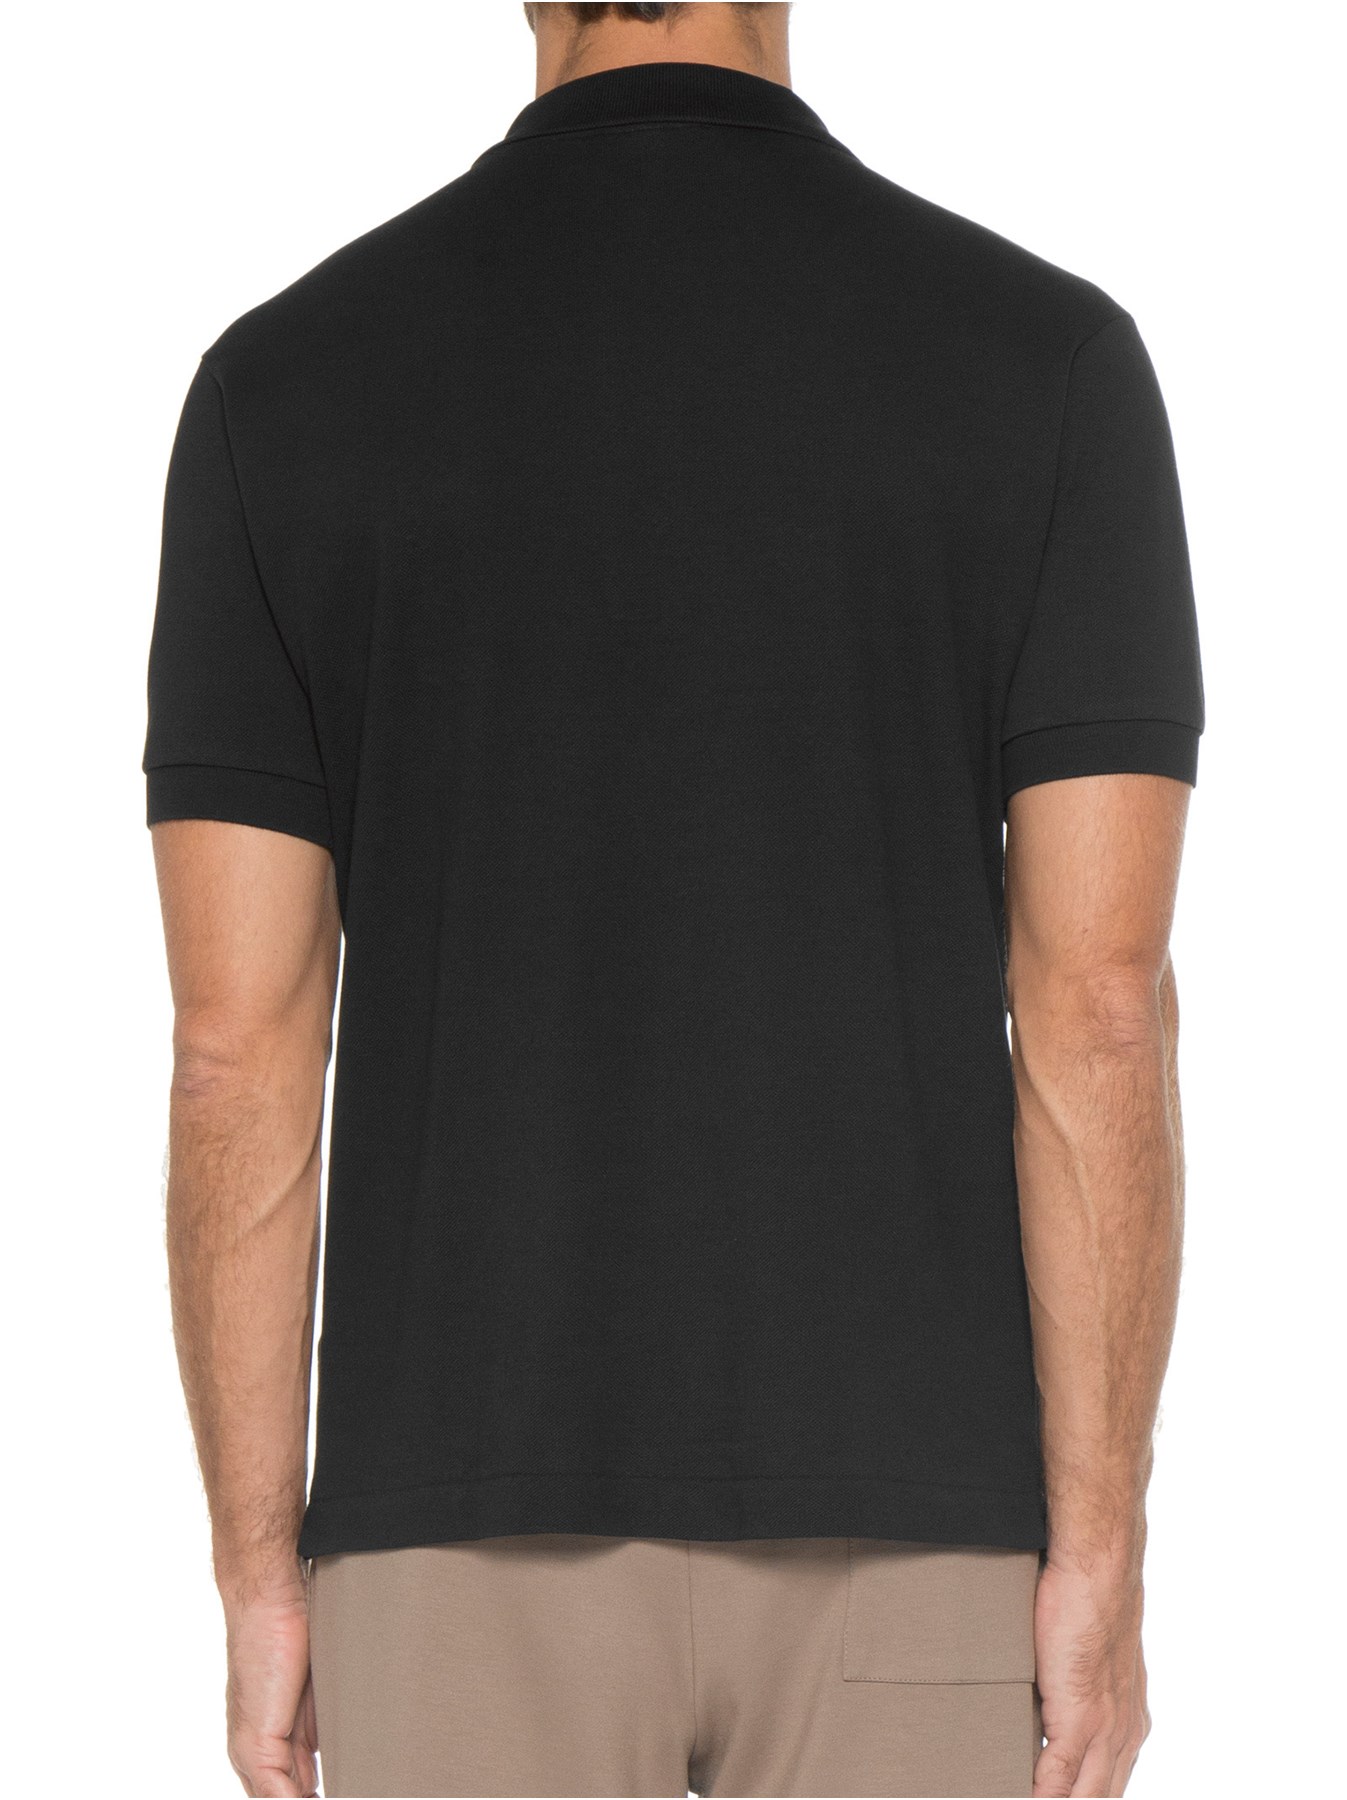 Camiseta Masculina - Emporio Armani 7 - Preto - Shop2gether